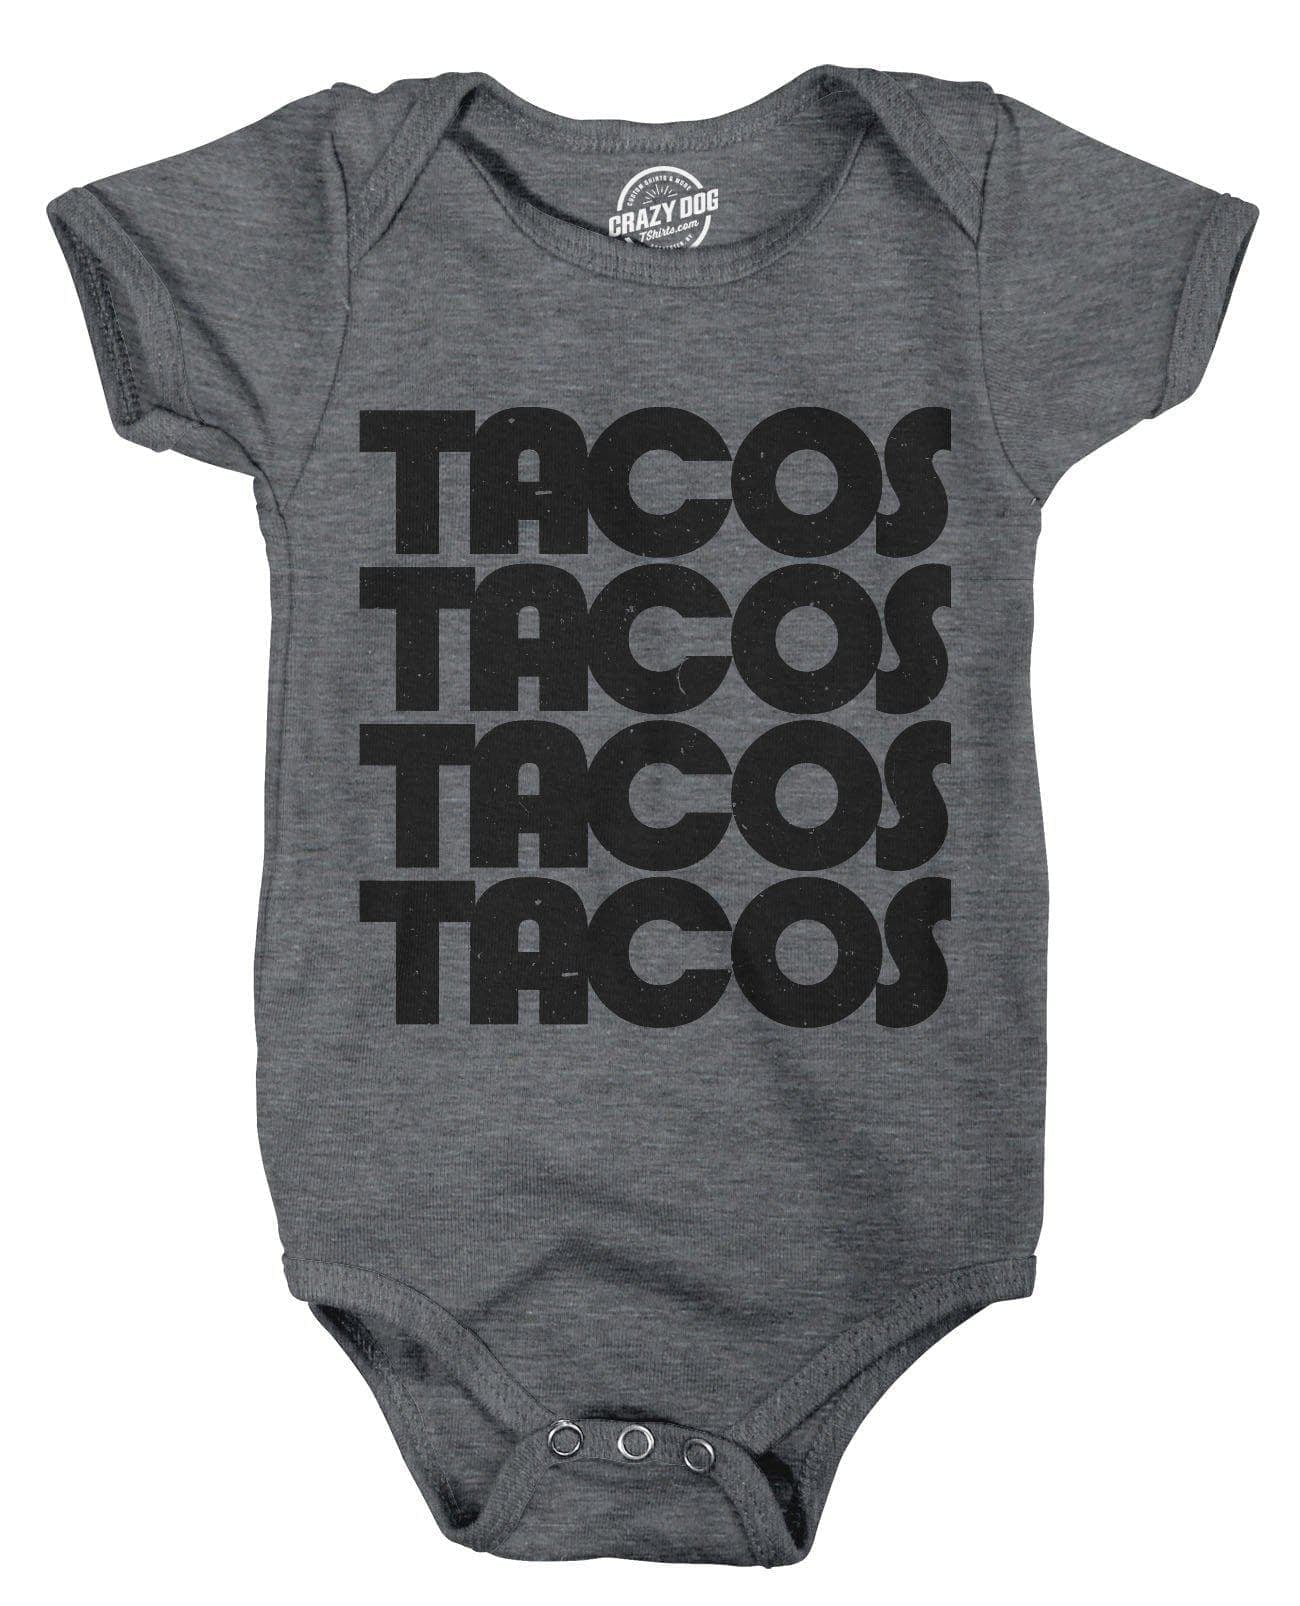 Tacos Tacos Tacos Baby Bodysuit - Crazy Dog T-Shirts